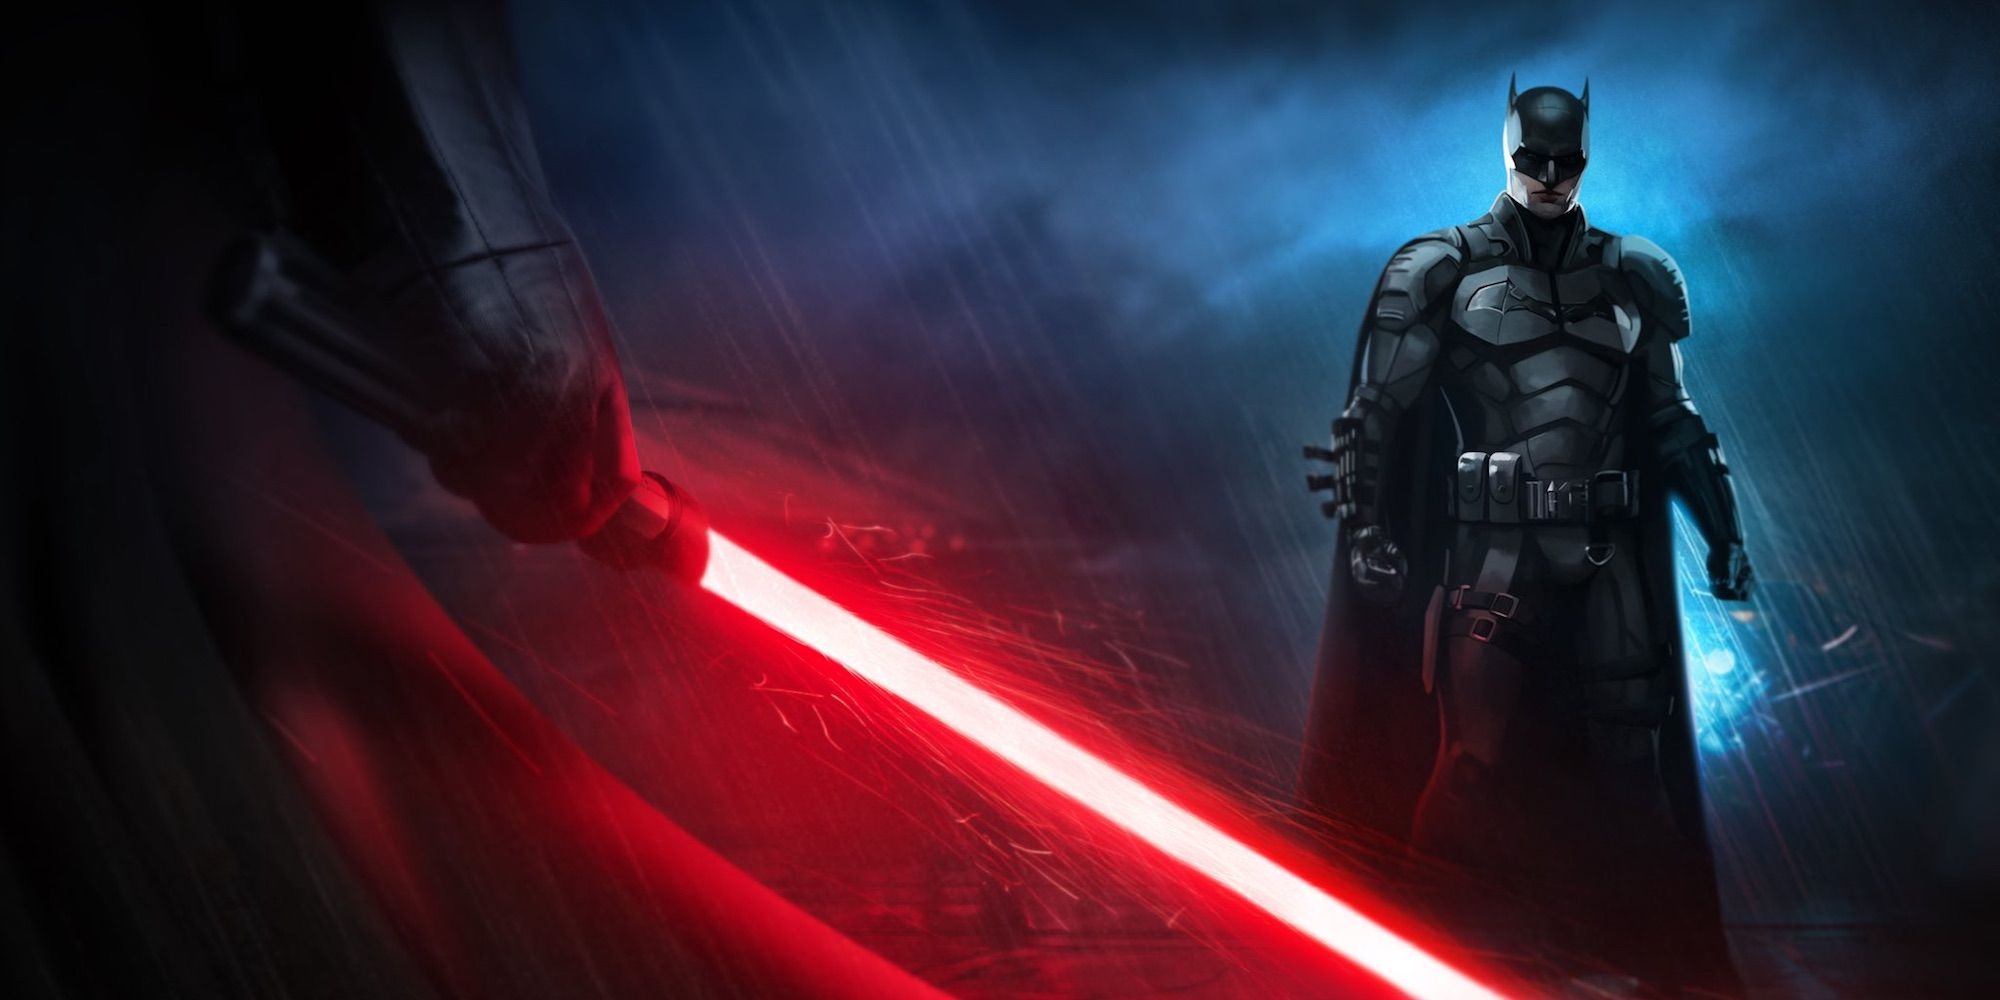 Star Wars vs DC Fan Art Imagines Epic Darth Vader & Batman Showdown